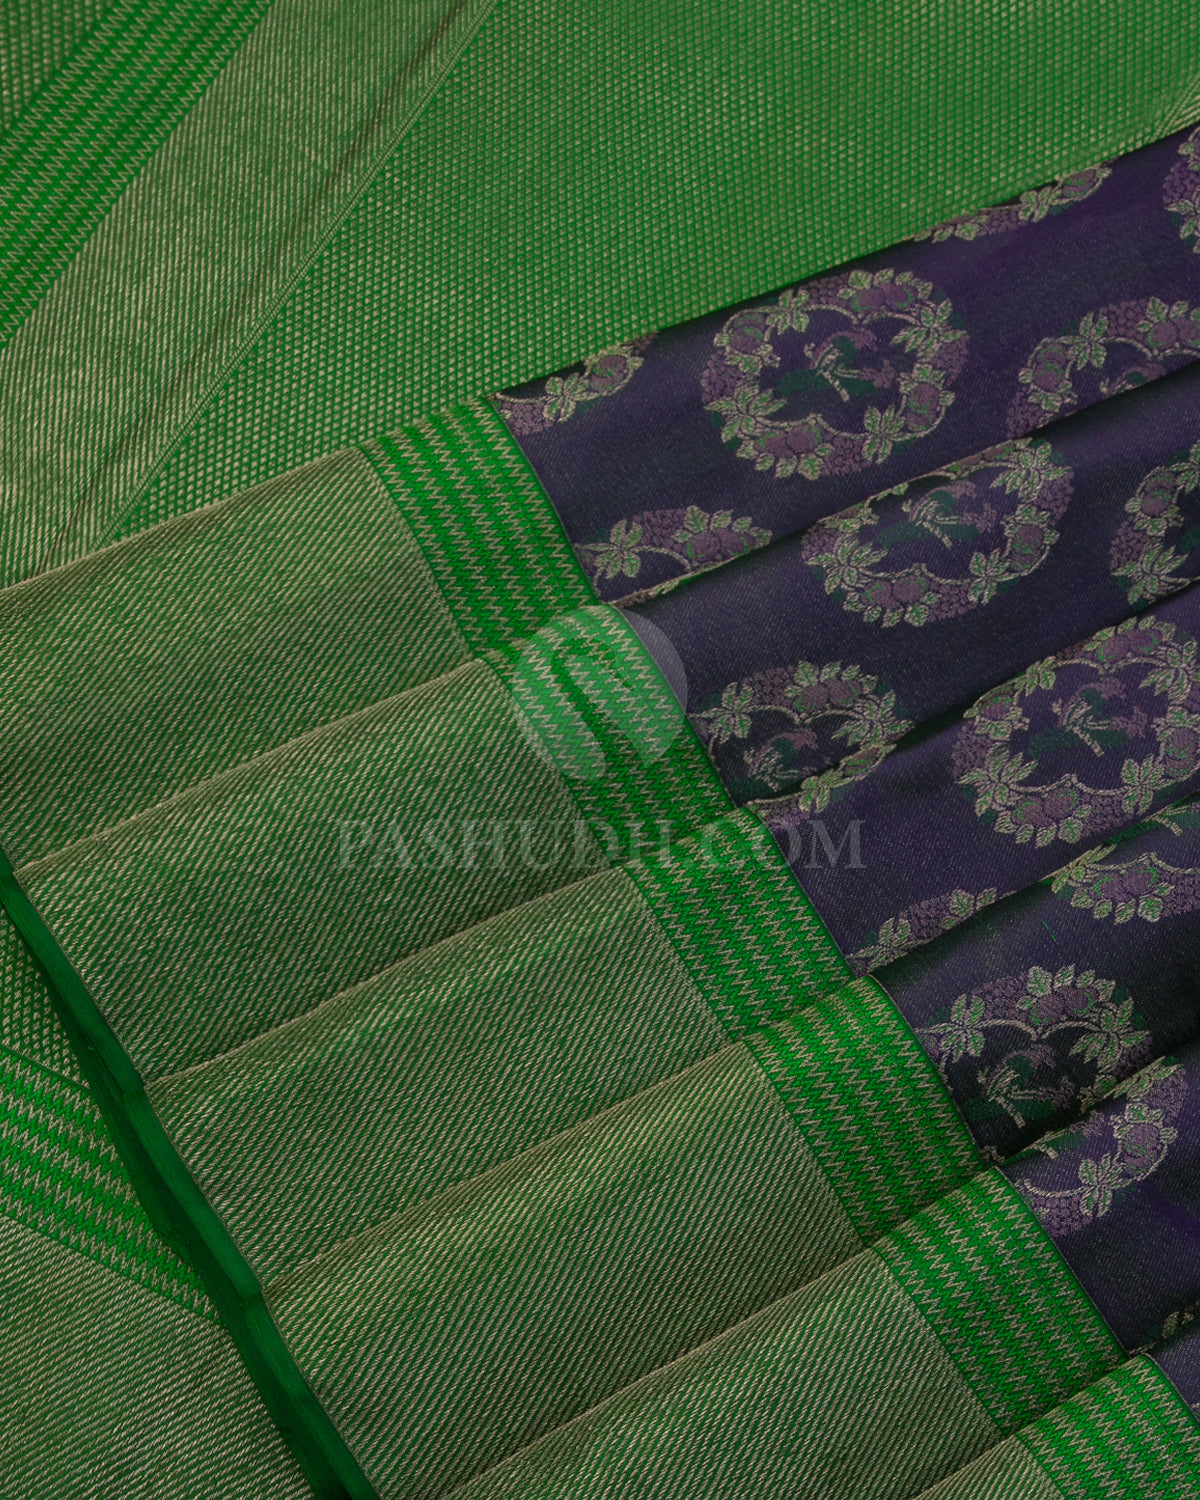 Indigo Blue and Dark Green Kanjivaram Silk Saree - D510(B) - View 3